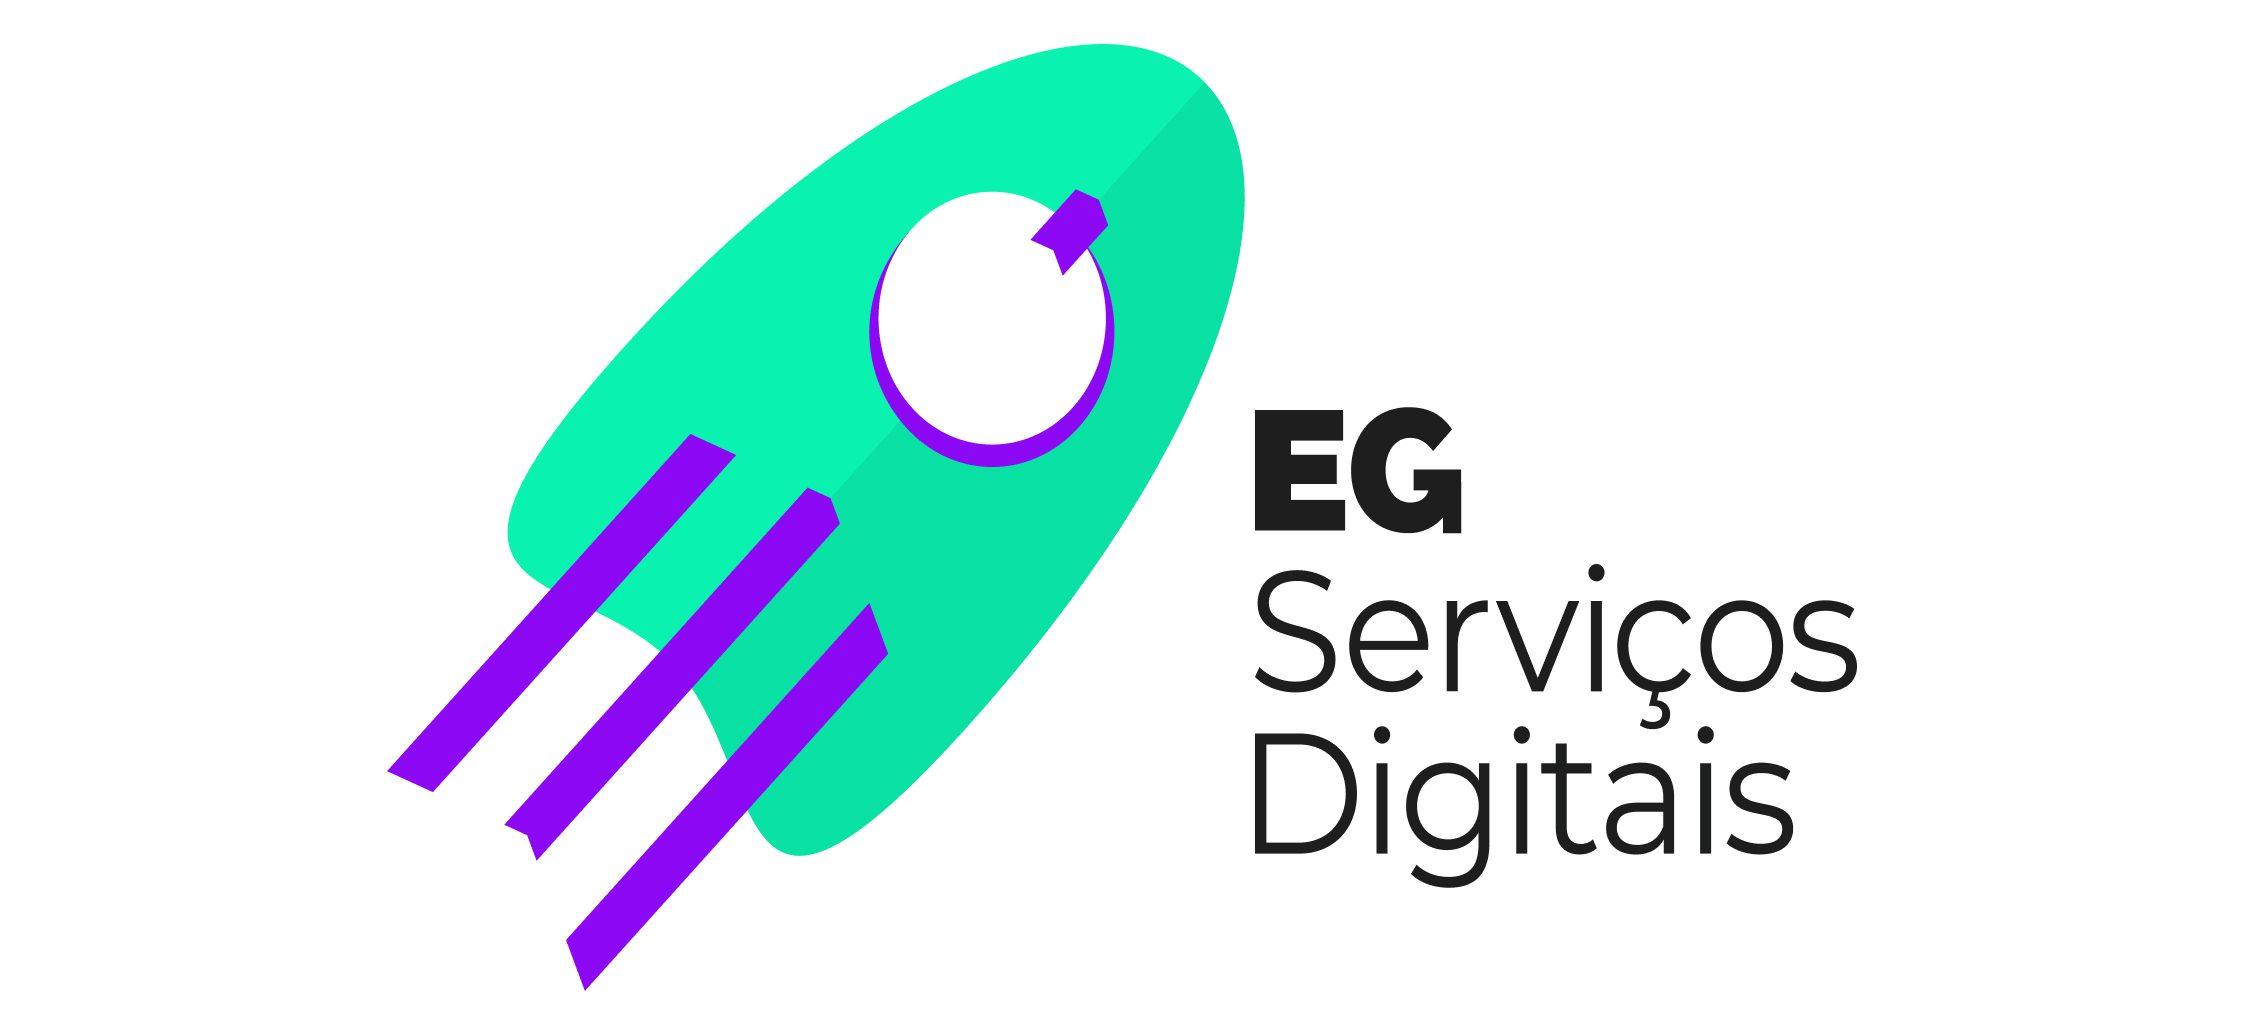 EG serviços digitais